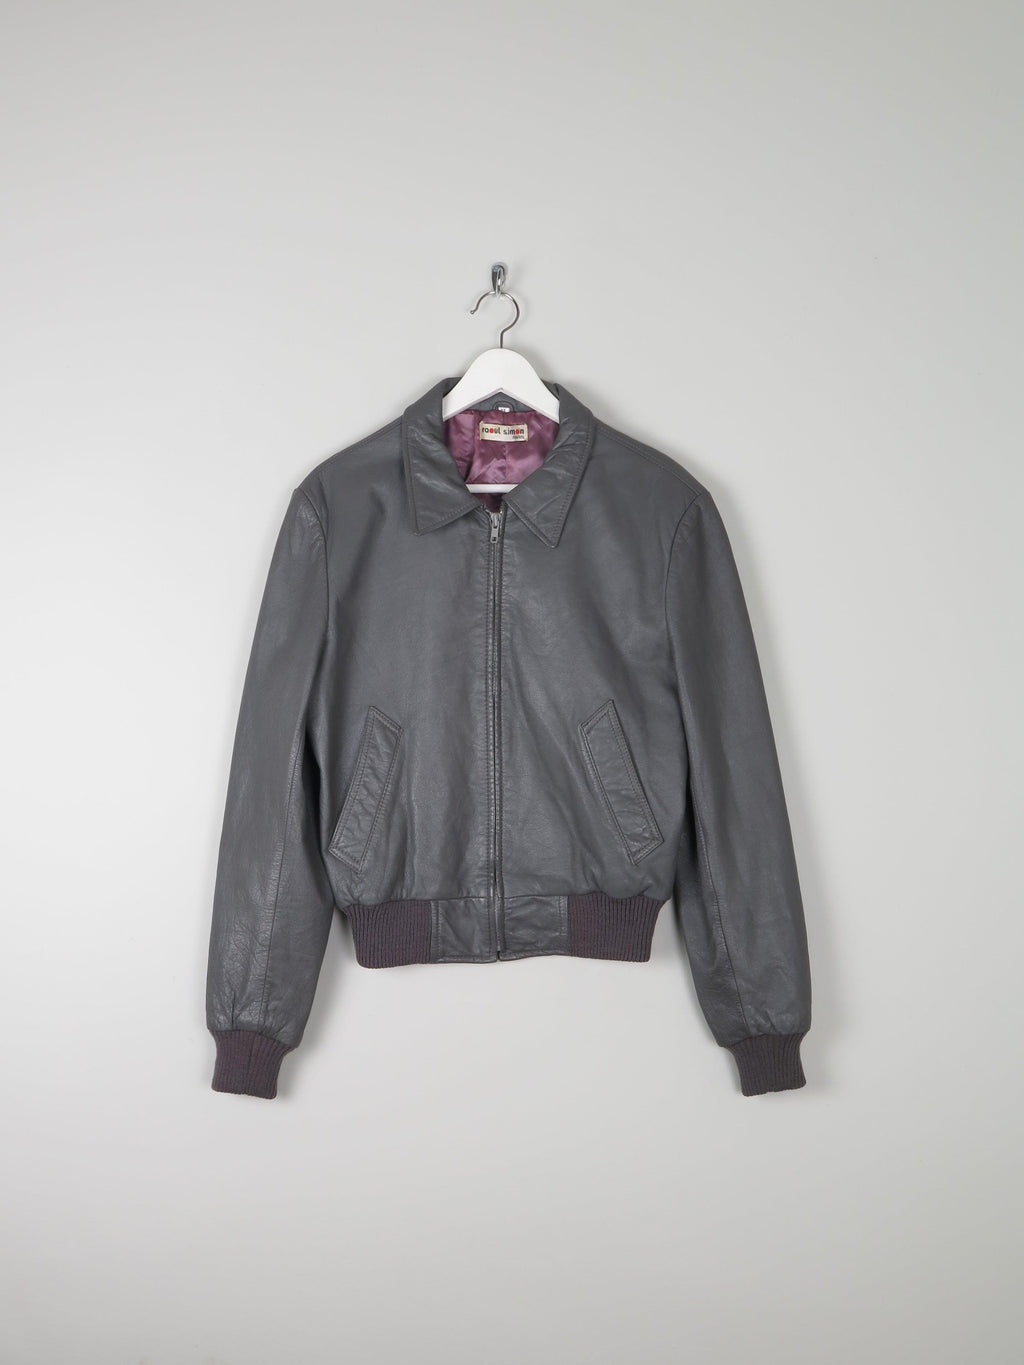 Men’s Grey Leather Bomber Jacket 1970s S/M - The Harlequin